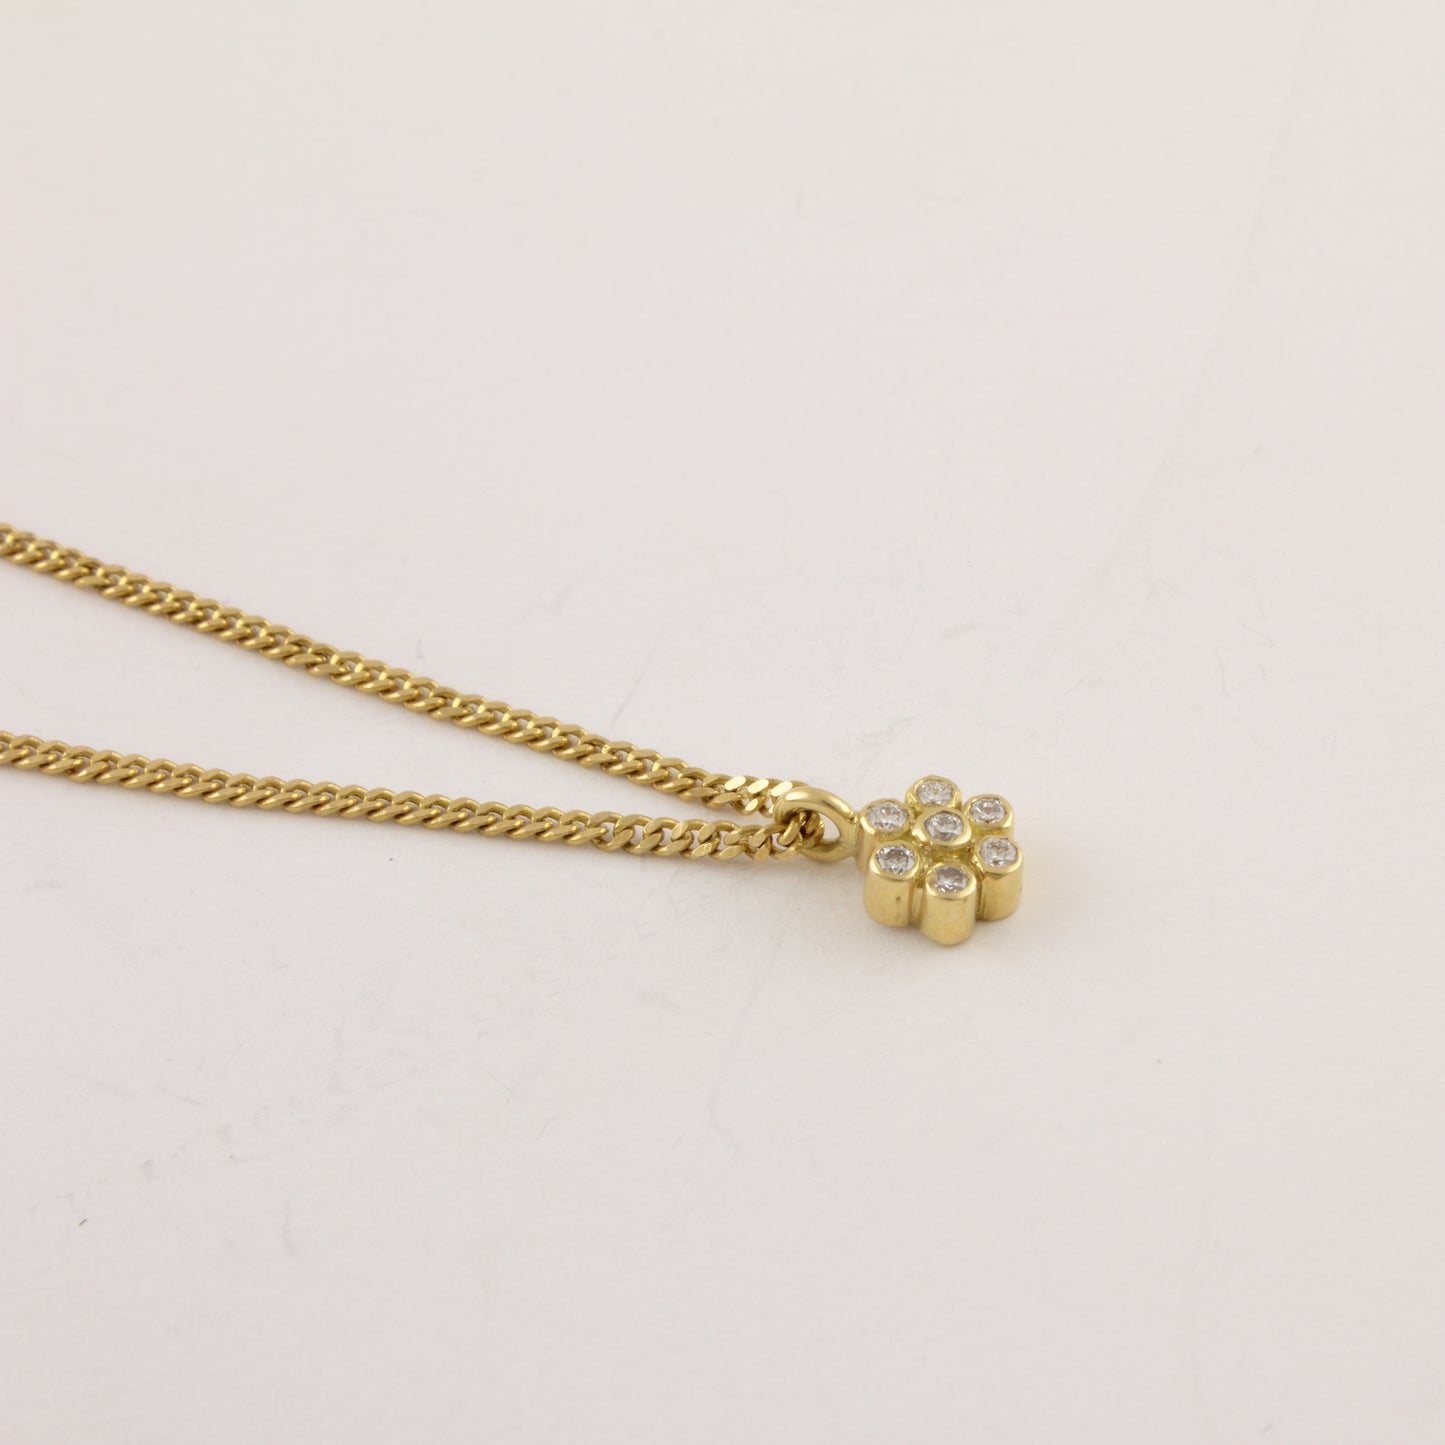 The Babyrasa Saira Floral Gold and Diamond Pendant by Rasvihar